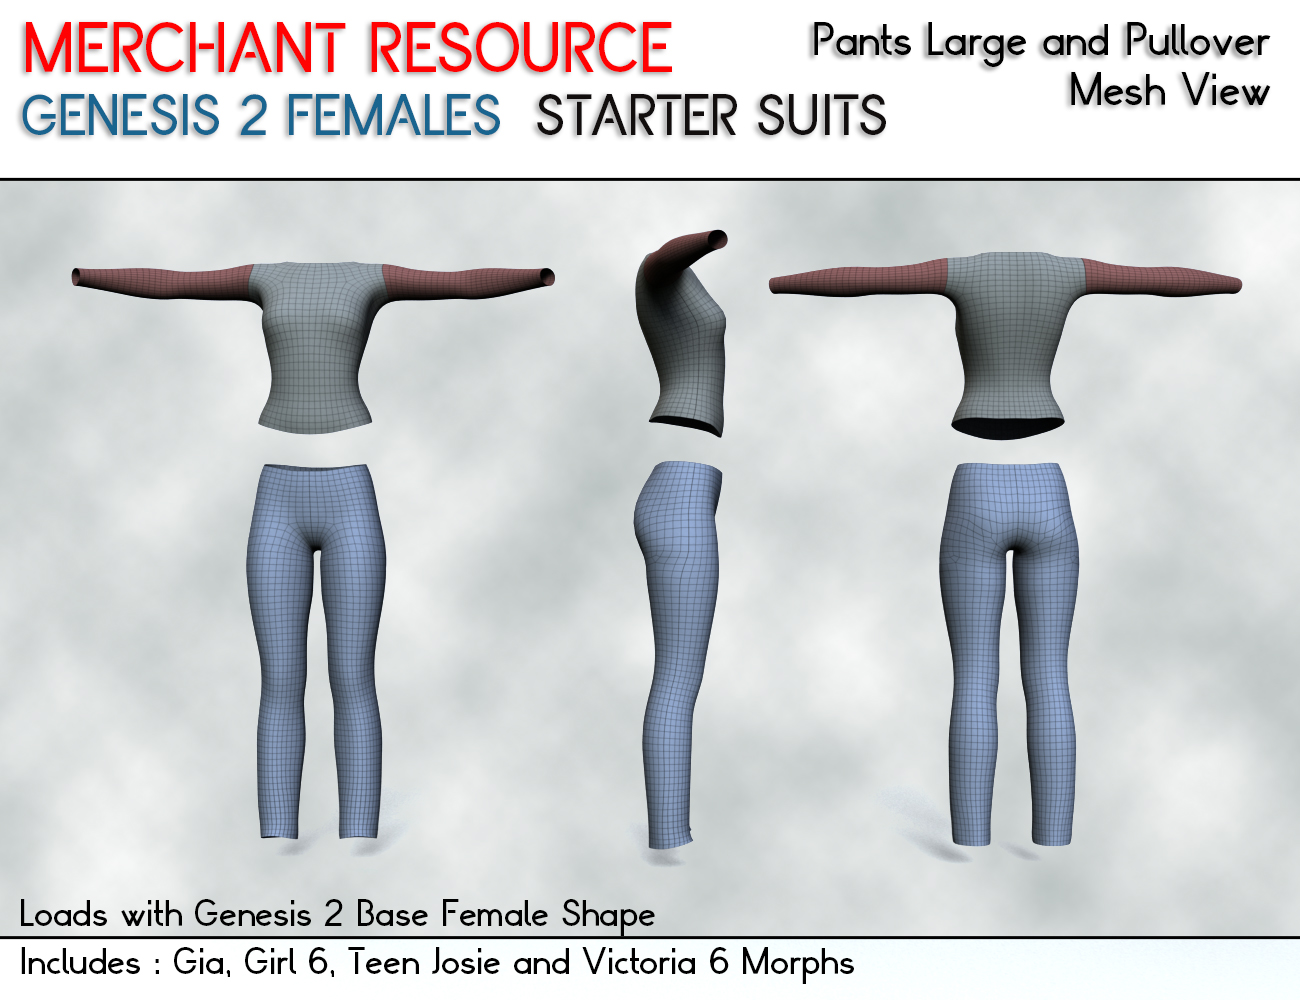 Merchant Resource Genesis 2 Females Starter Suits by: V3Digitimes, 3D Models by Daz 3D